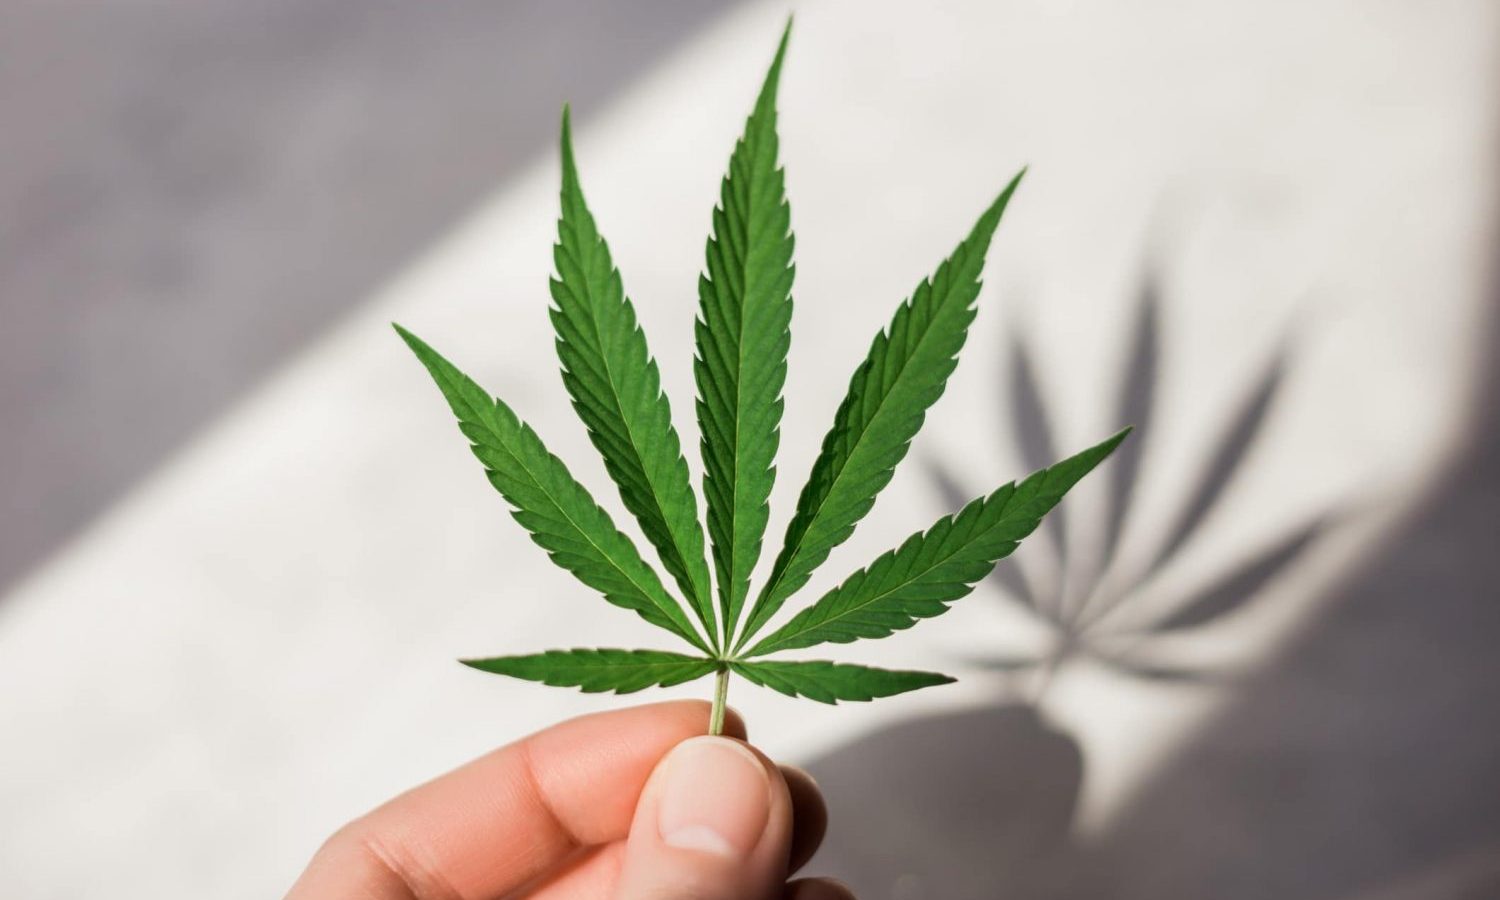 Democratic Senate Leaders Announce Plan To Federally Legalize Marijuana in 2021